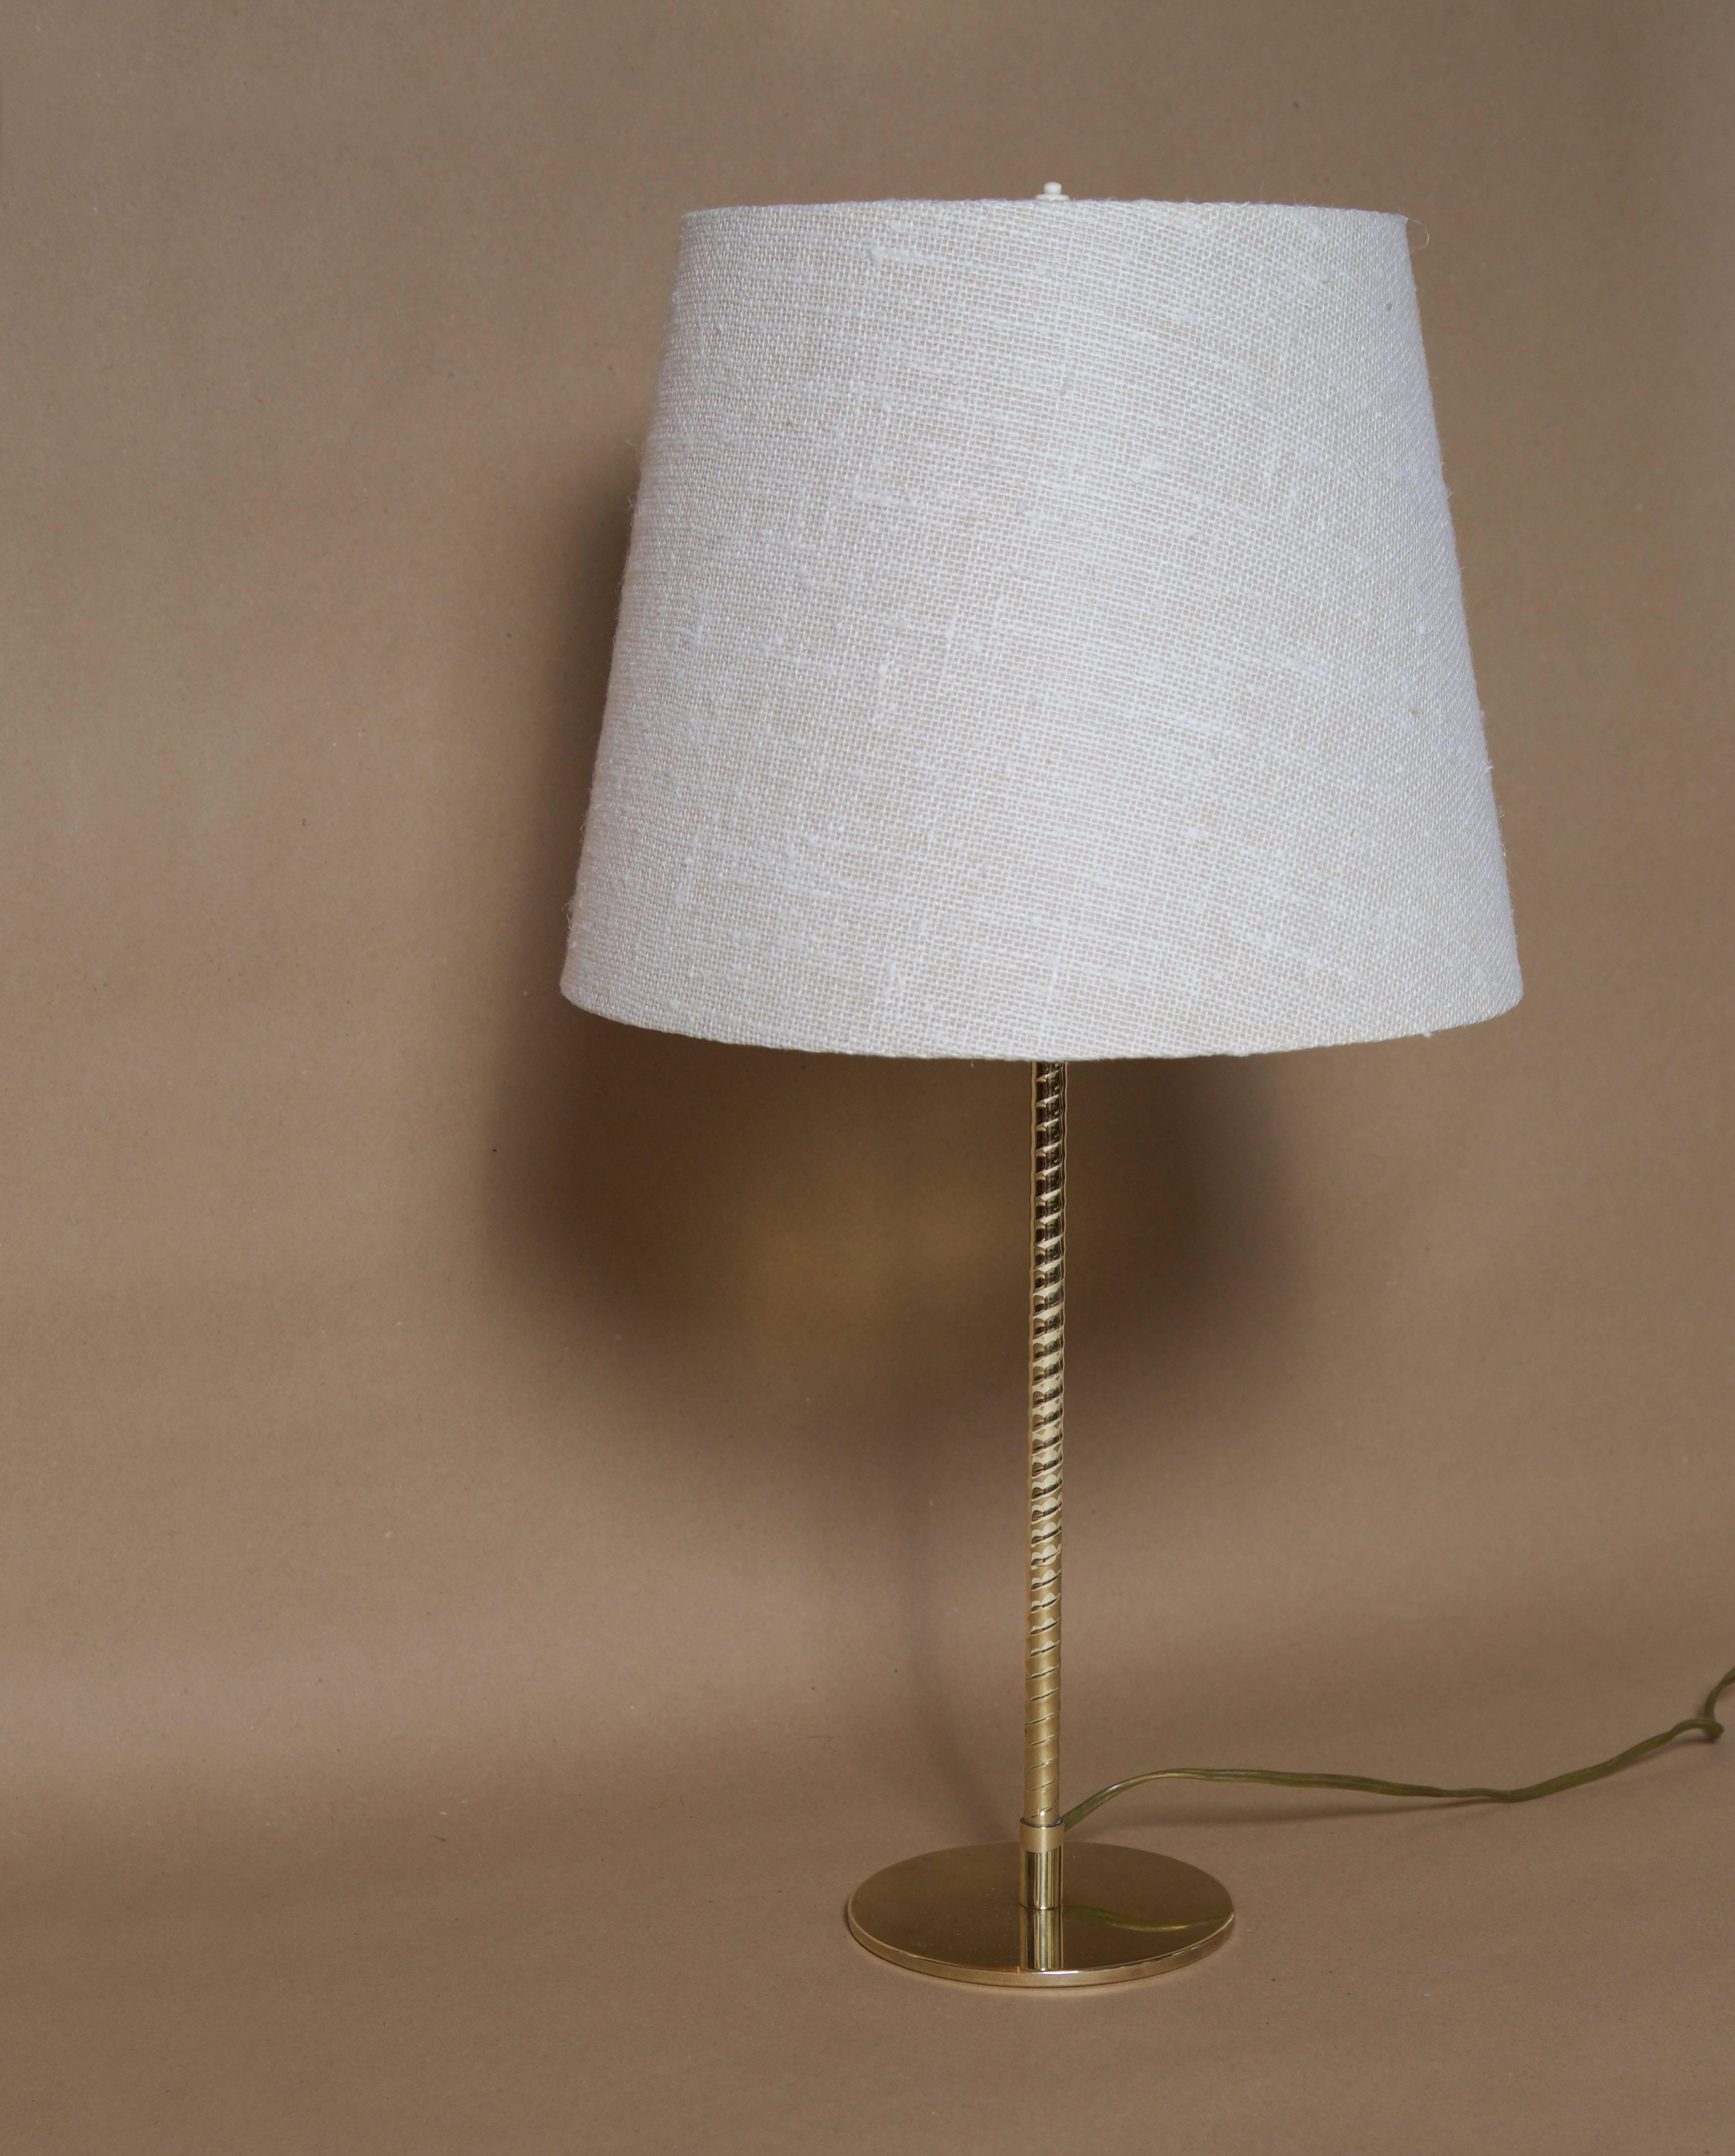 Scandinavian Modern Paavo Tynell, Table Lamp, Model nr. 9205, Taito Oy